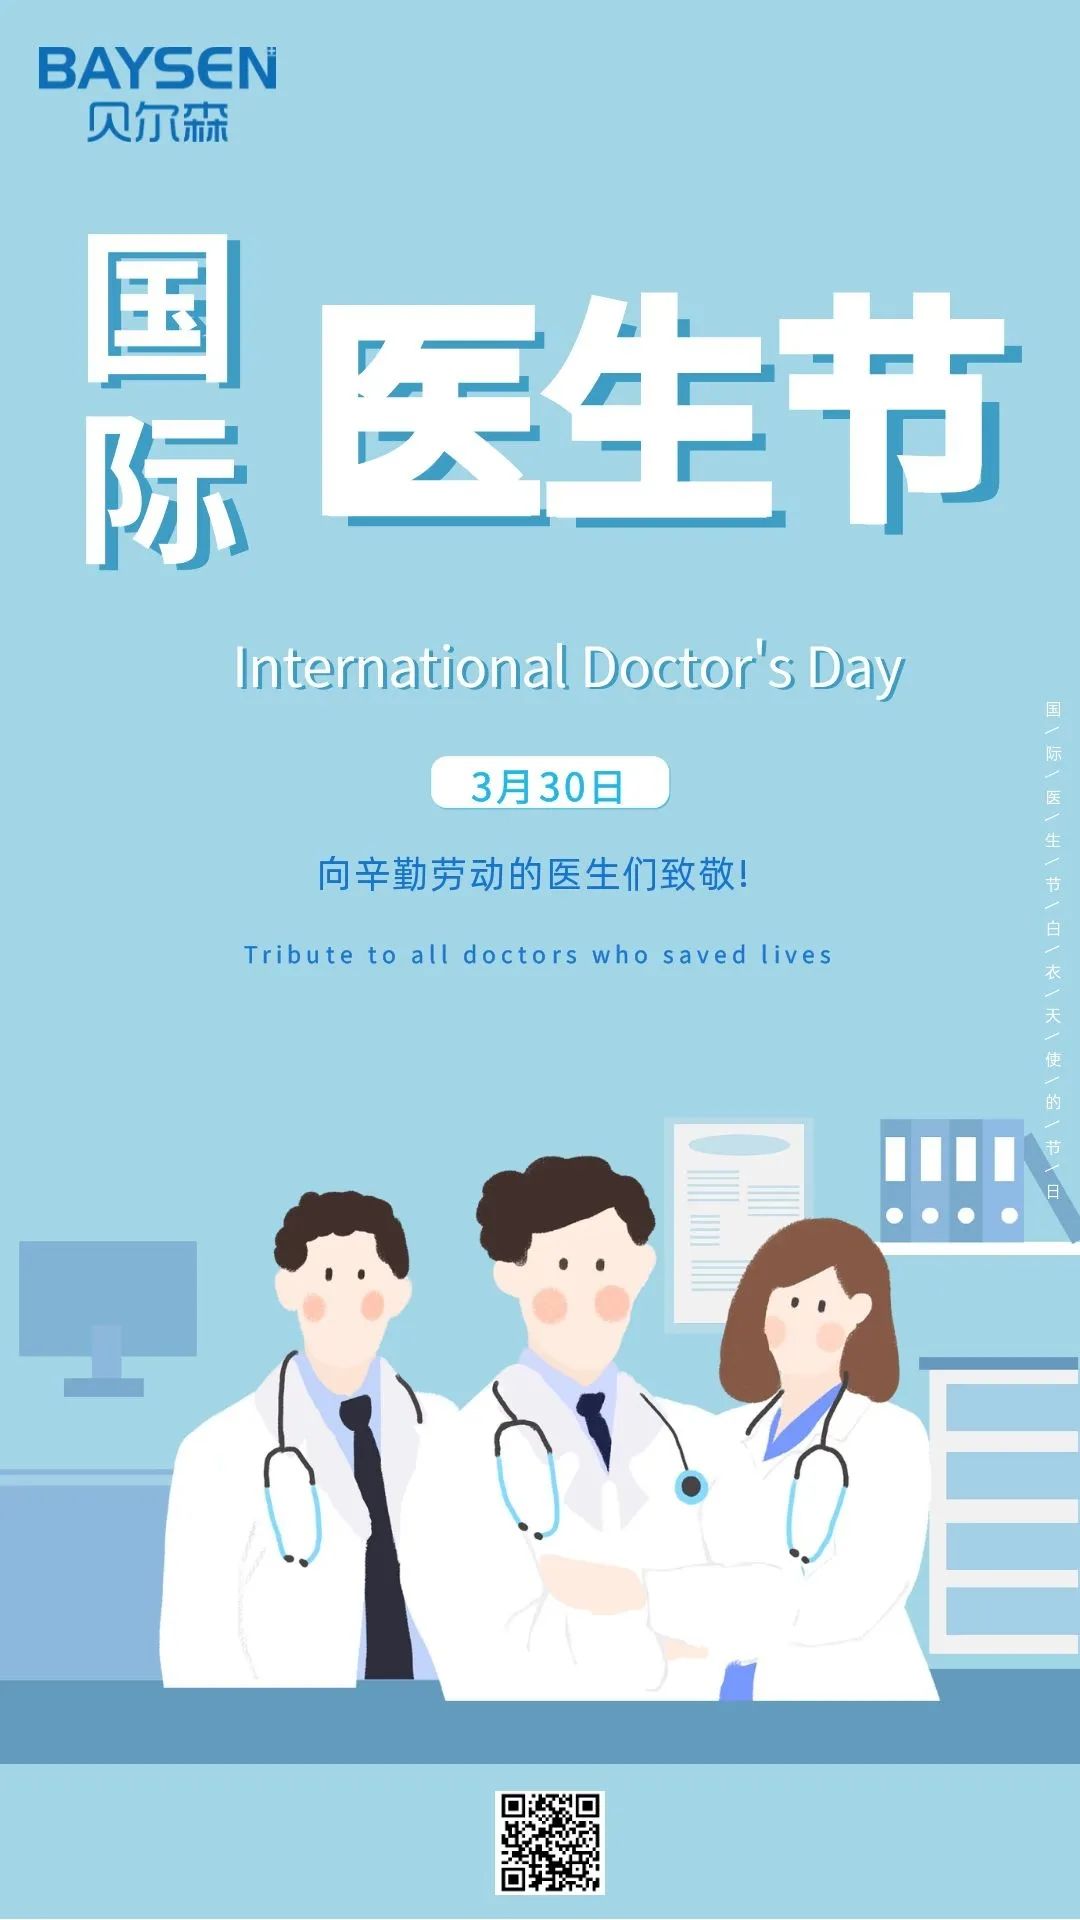 International Doctor’s Day